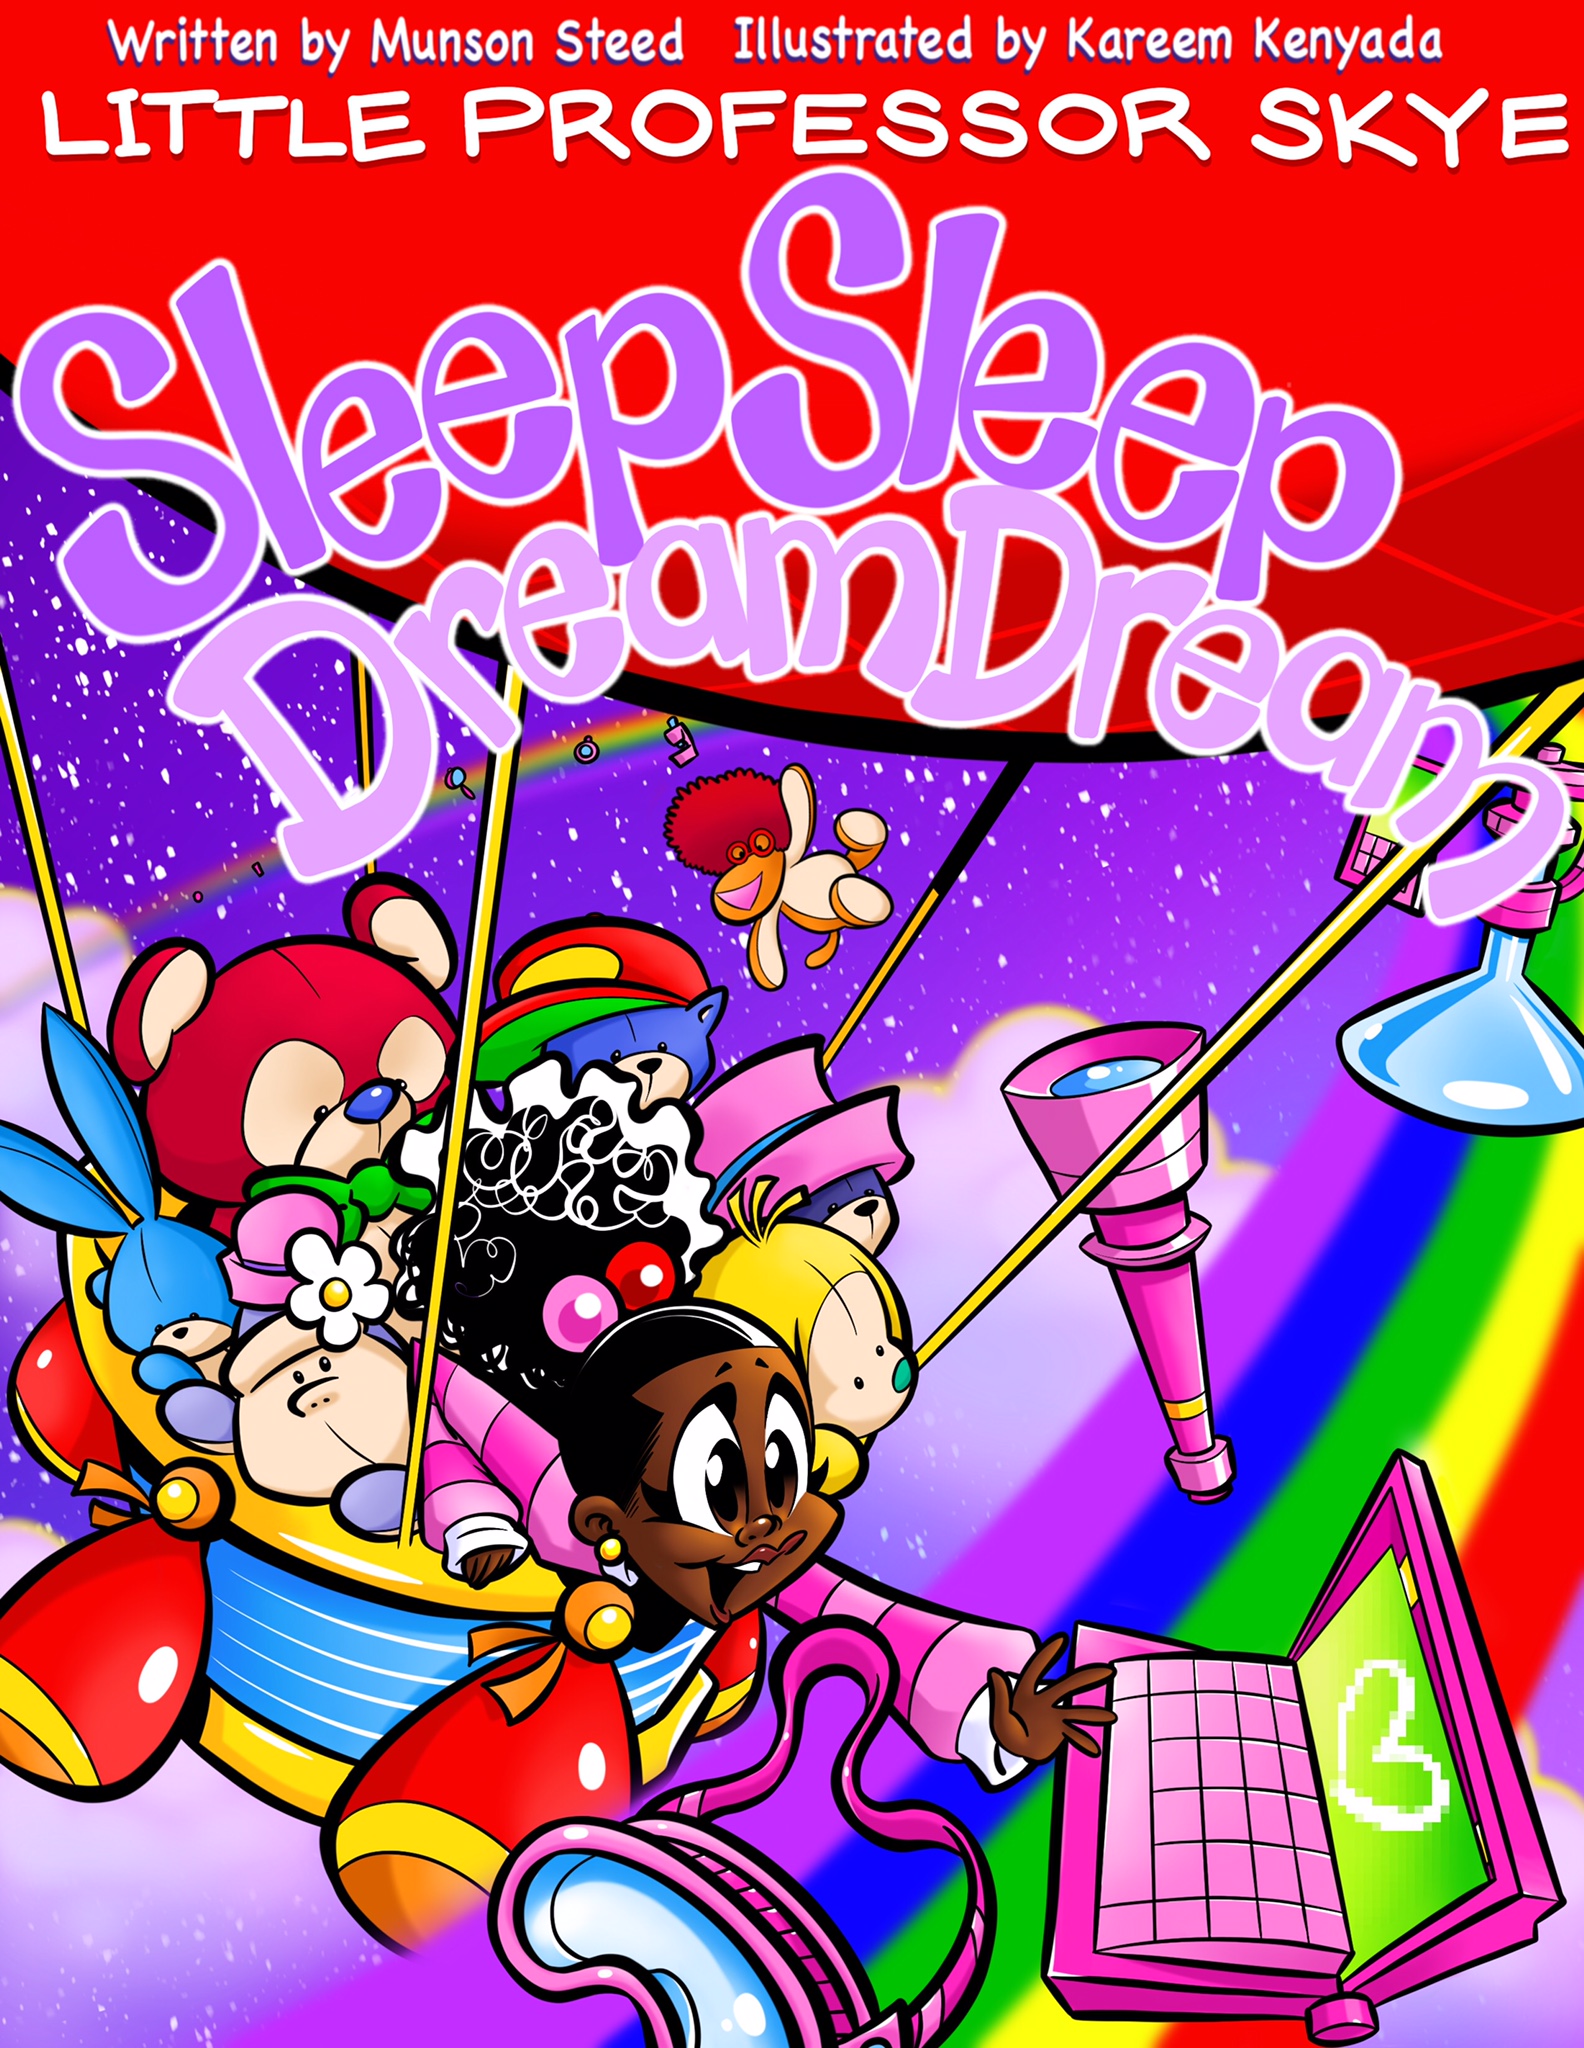 Munson Steed Releases New Children’s Book, Little Professor Skye Series: Sleep Sleep Dream Dream